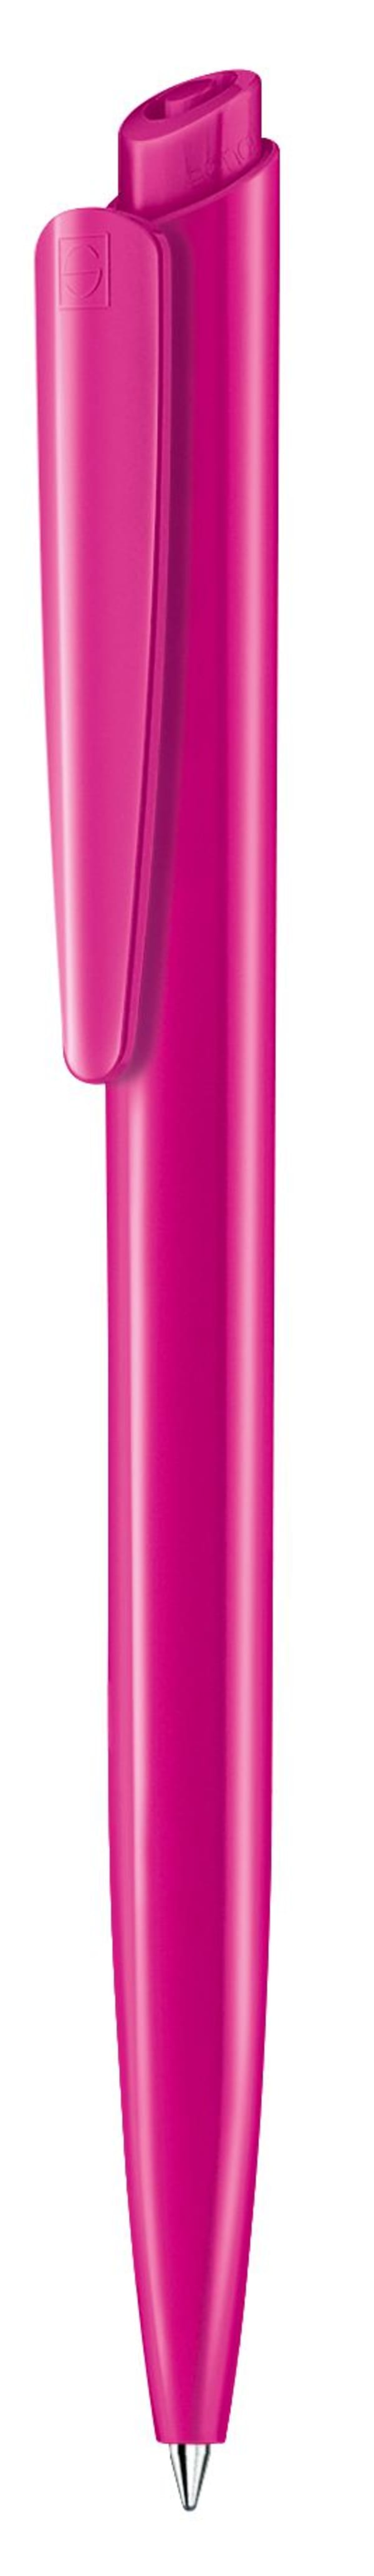 Kugelschreiber-Dart-Polished-blau-dokumentenecht-Pink-Kunststoff-Frontansicht-1